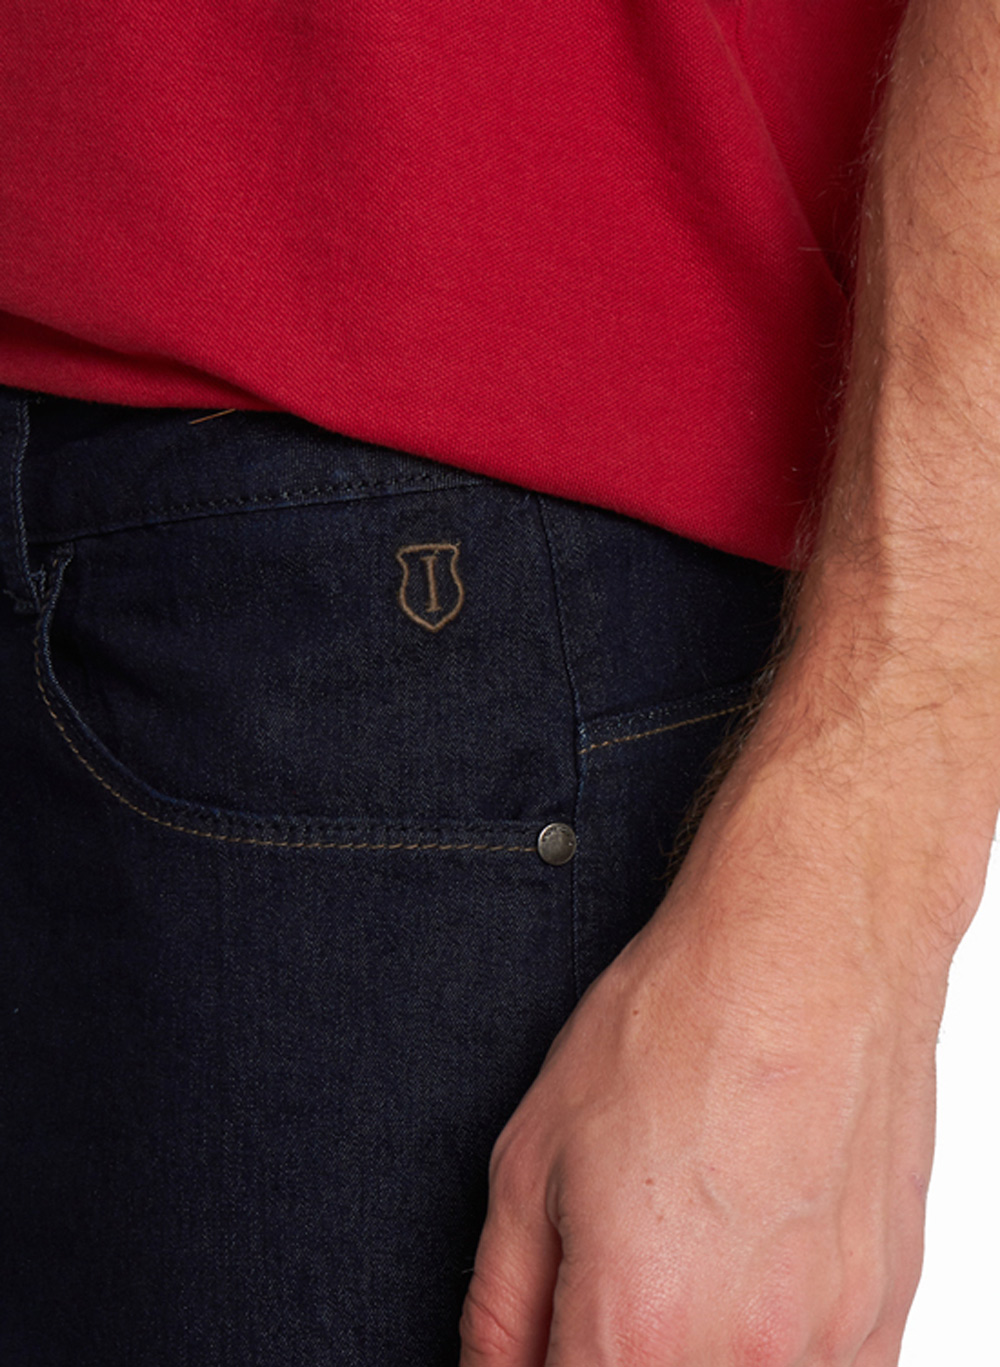 Calça Jeans Masculina Slim Five Pockets Individual